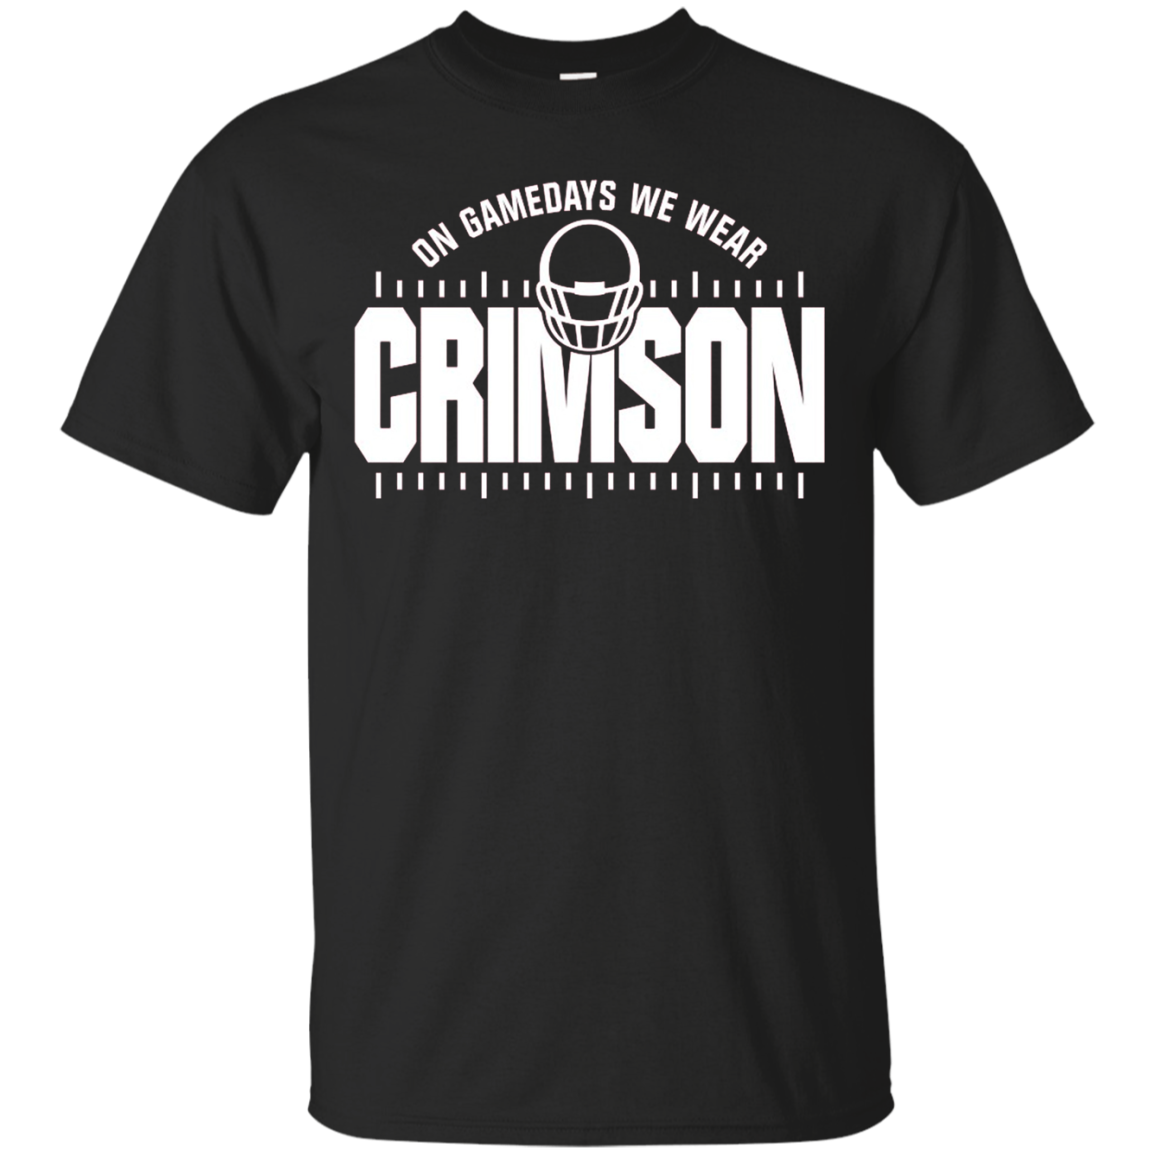 Get Here Alabama Crimson Tide Fans On Gamedays We Wear Crimson Football T Shirt - Tula Store